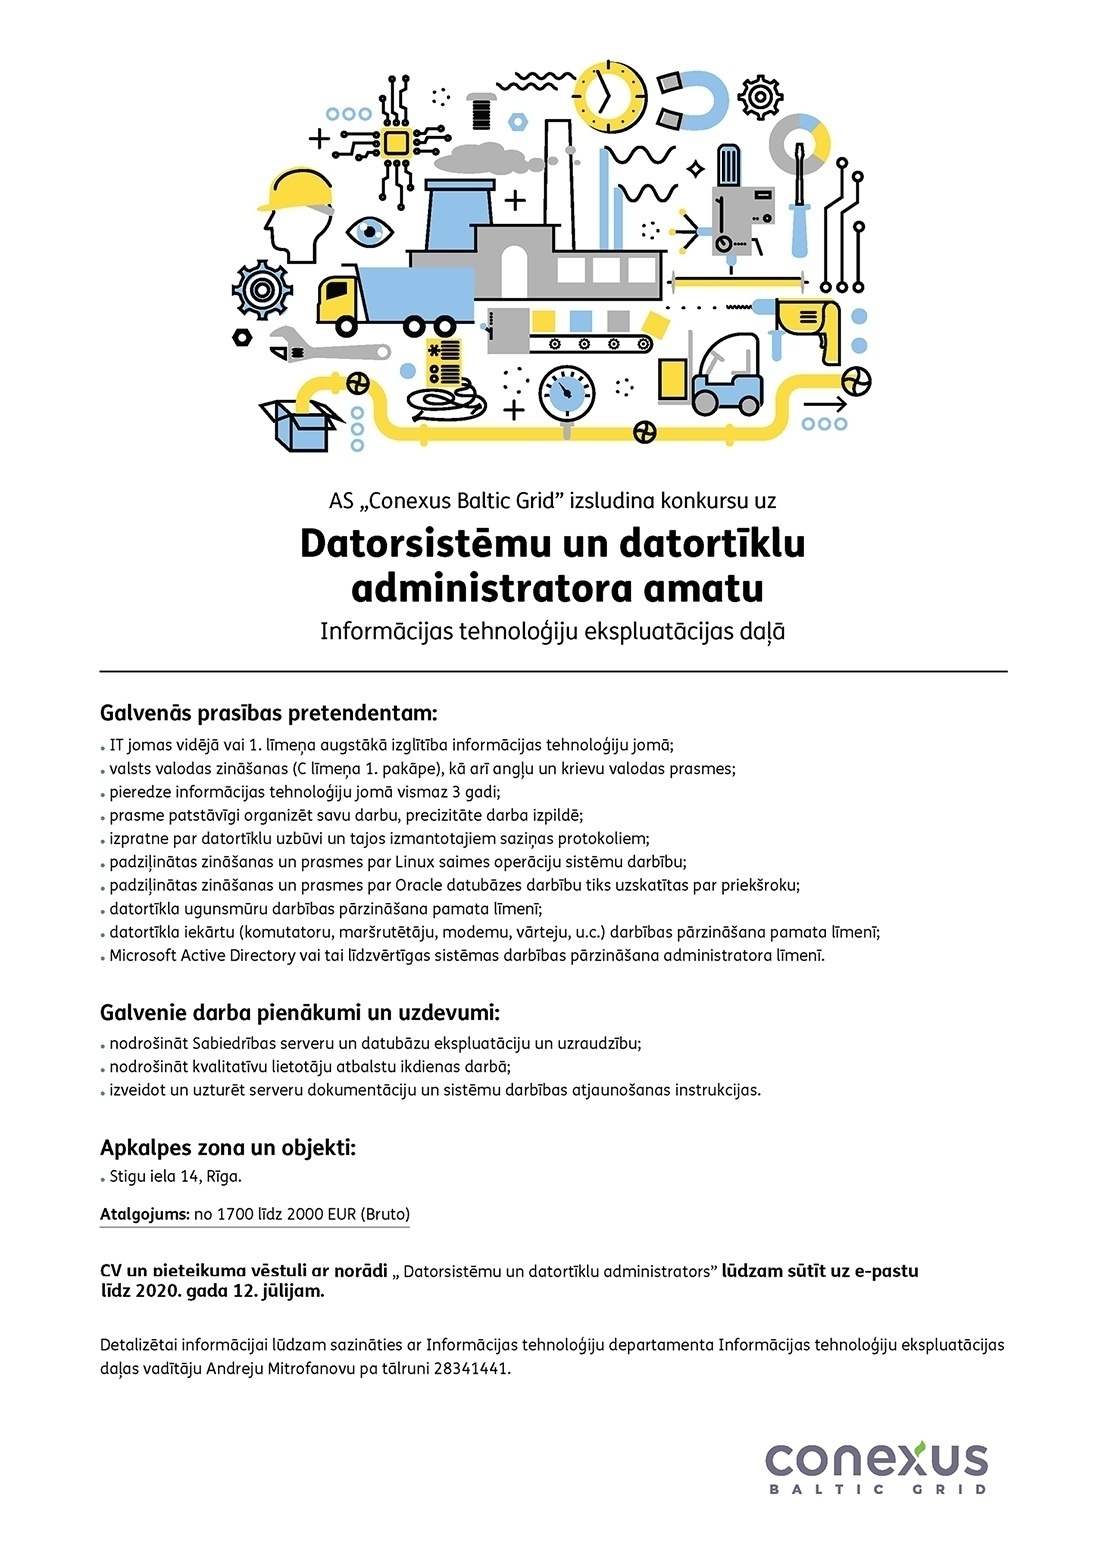 Conexus Baltic Grid, A/S Datorsistēmu un datortīklu administrators/-e